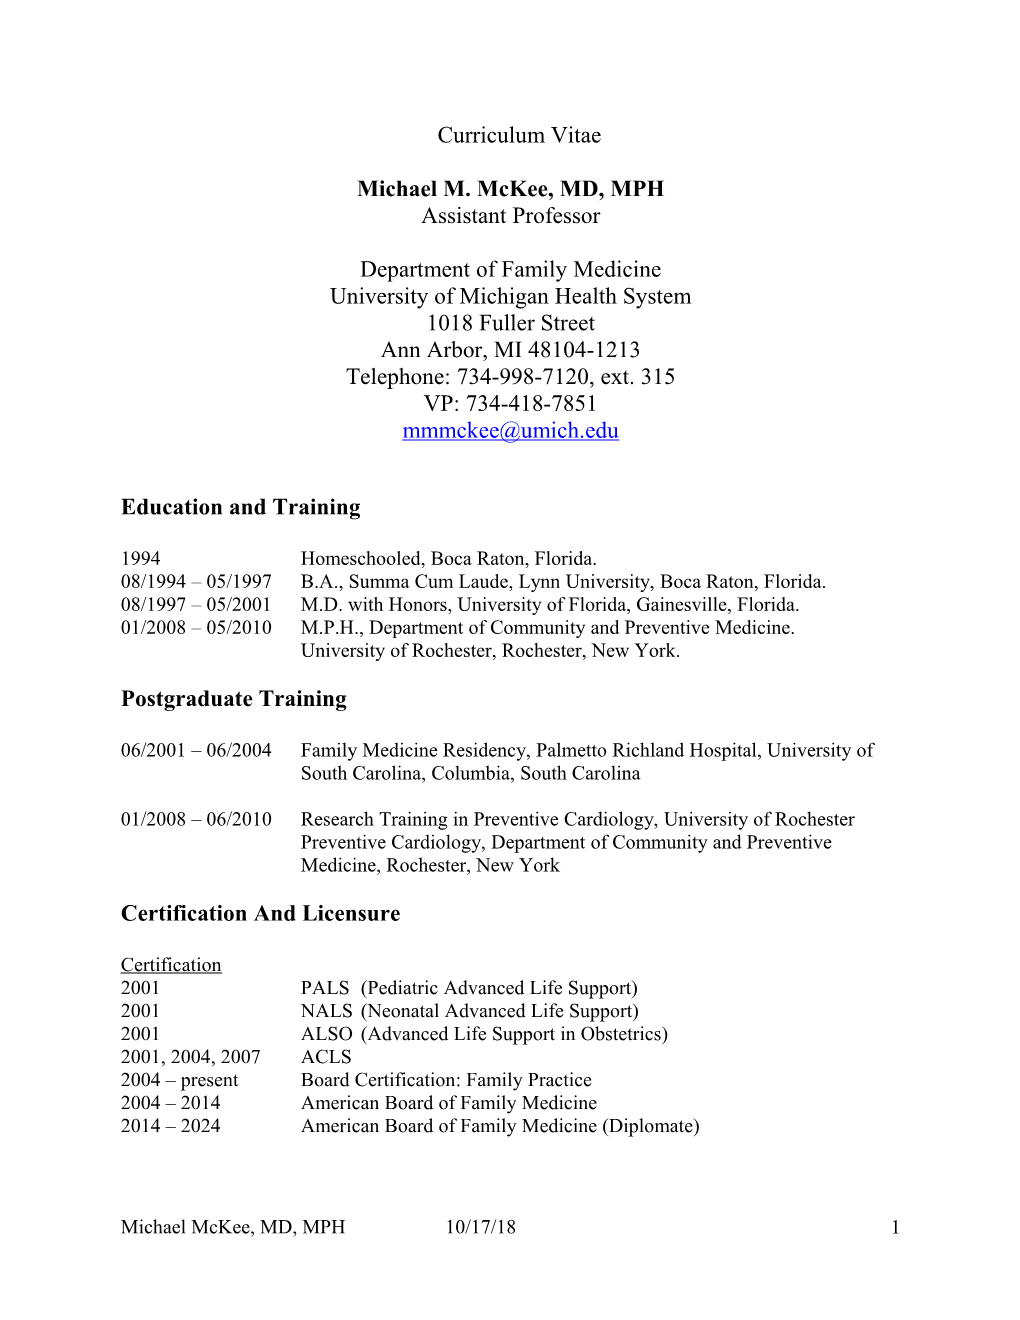 Michael M. Mckee, MD, MPH